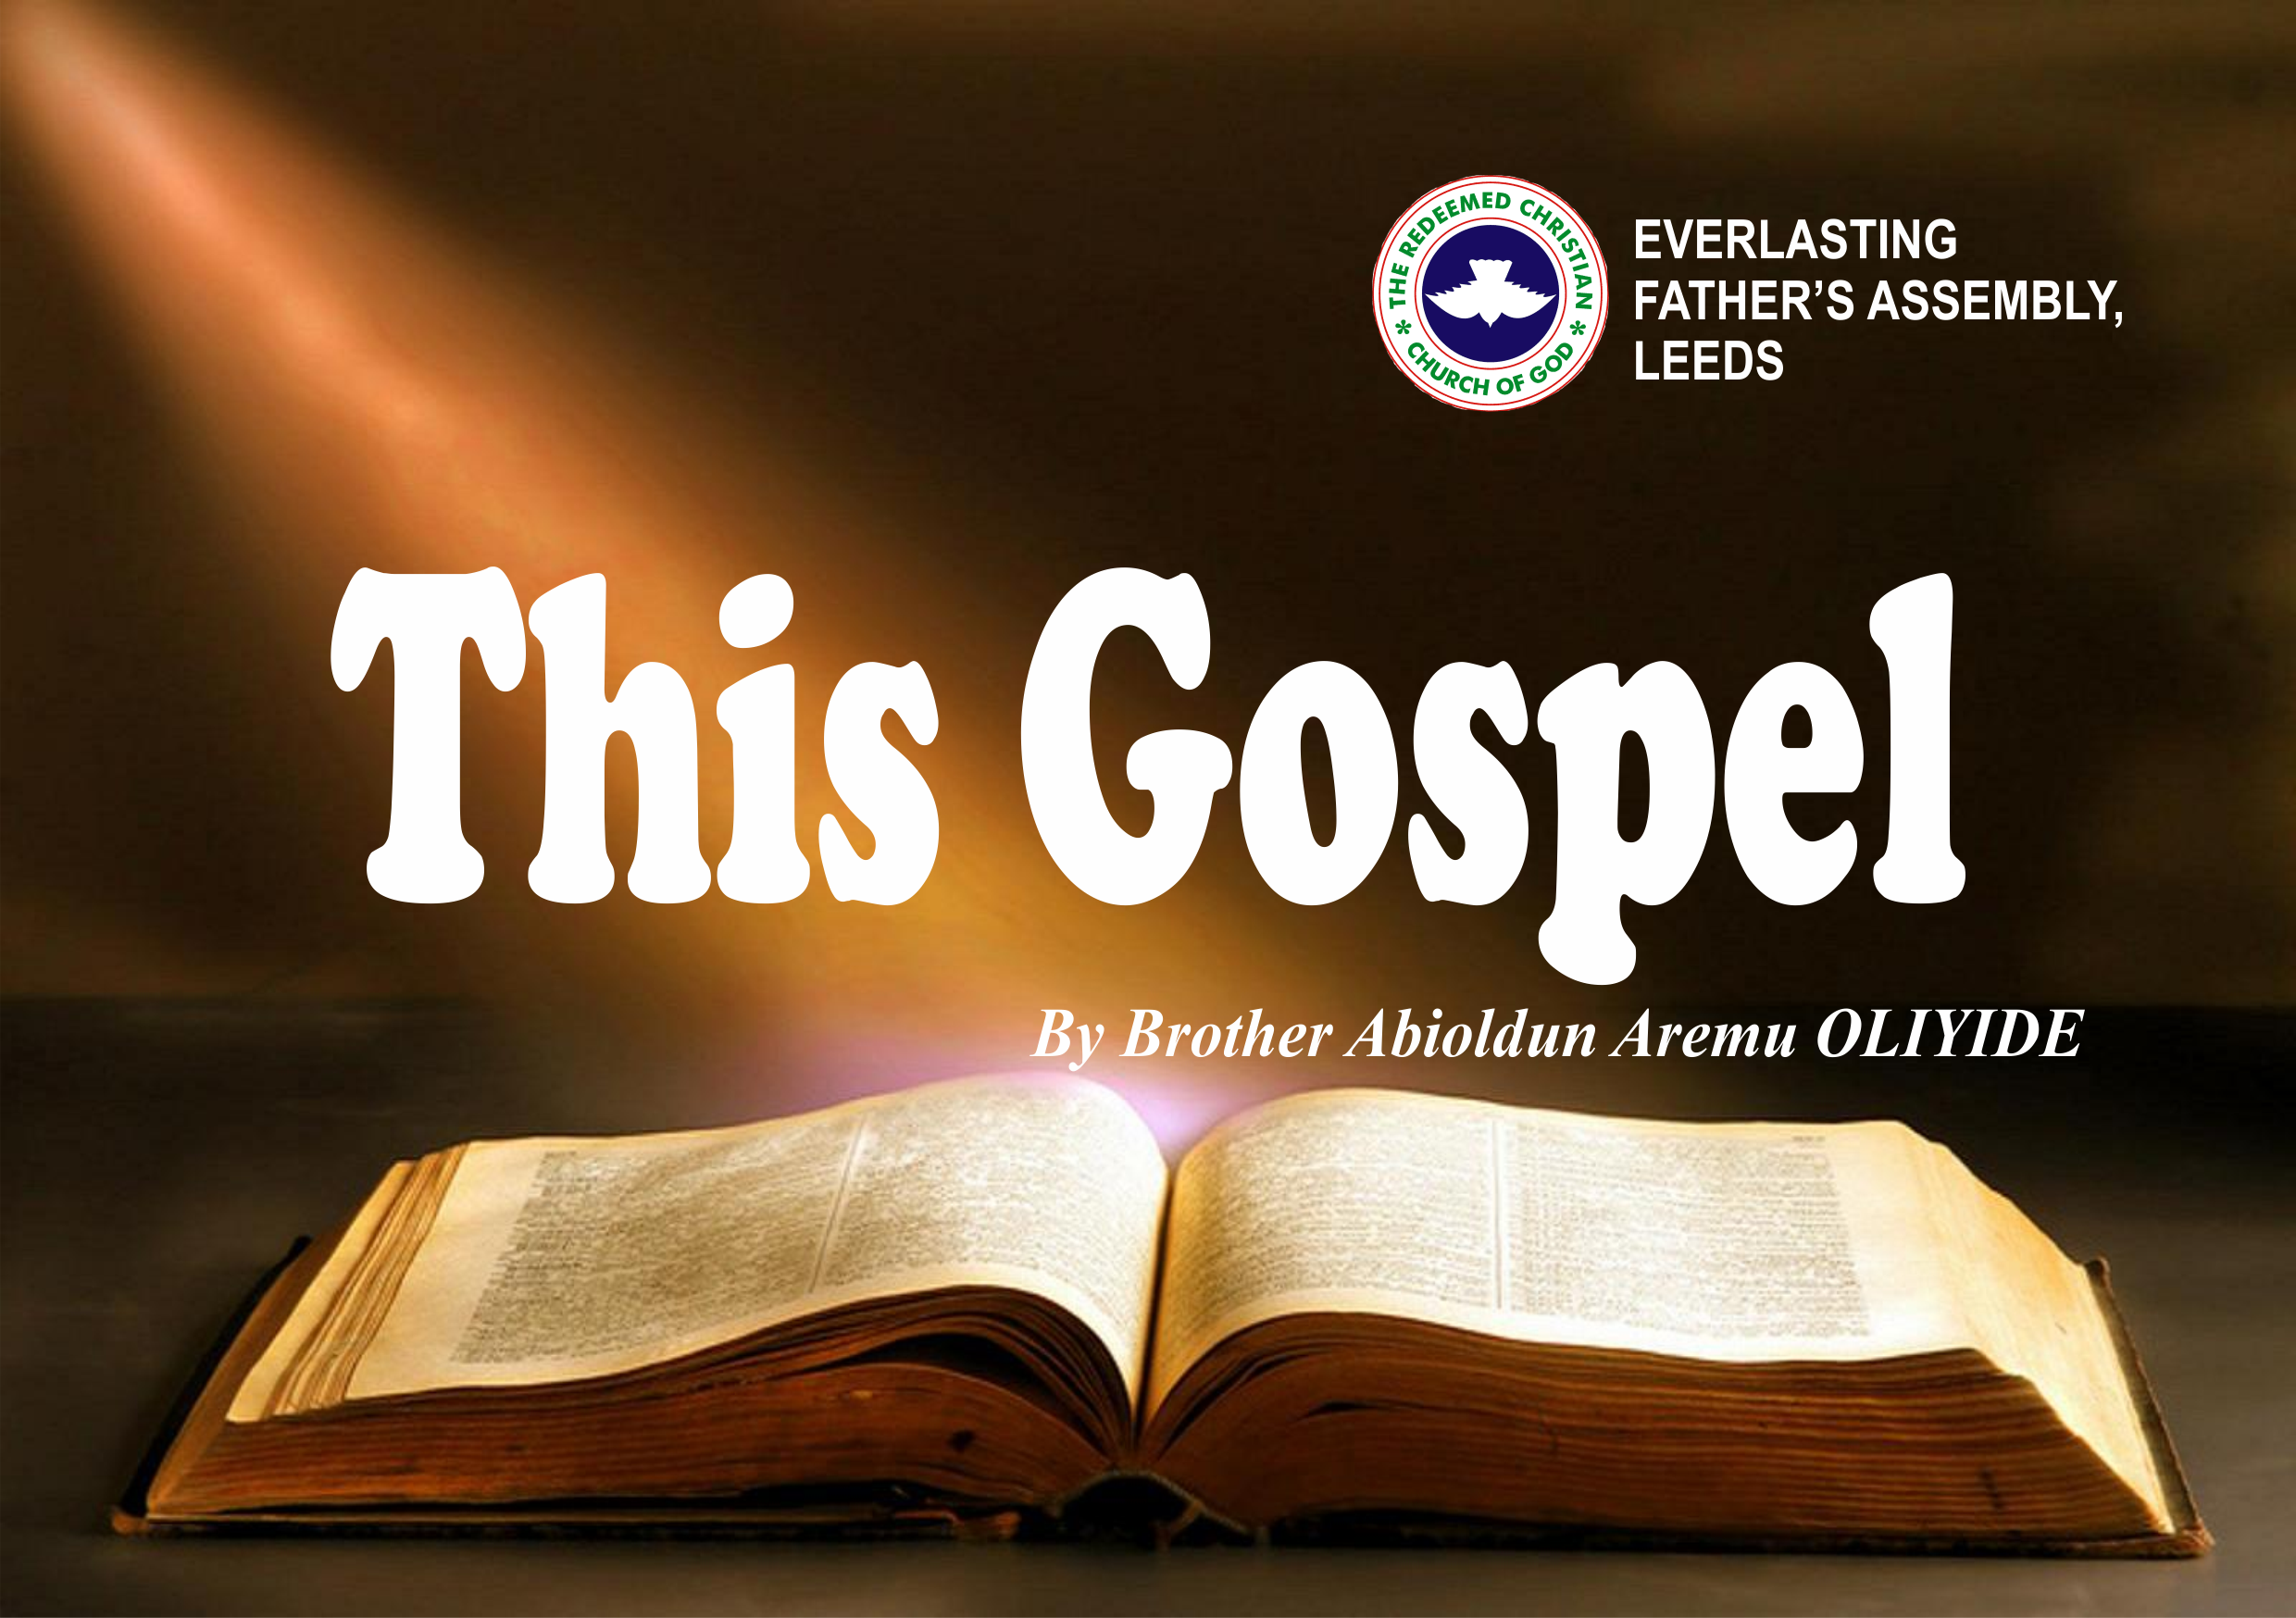 This Gospel, by Brother Abiodun Aremu Oliyide